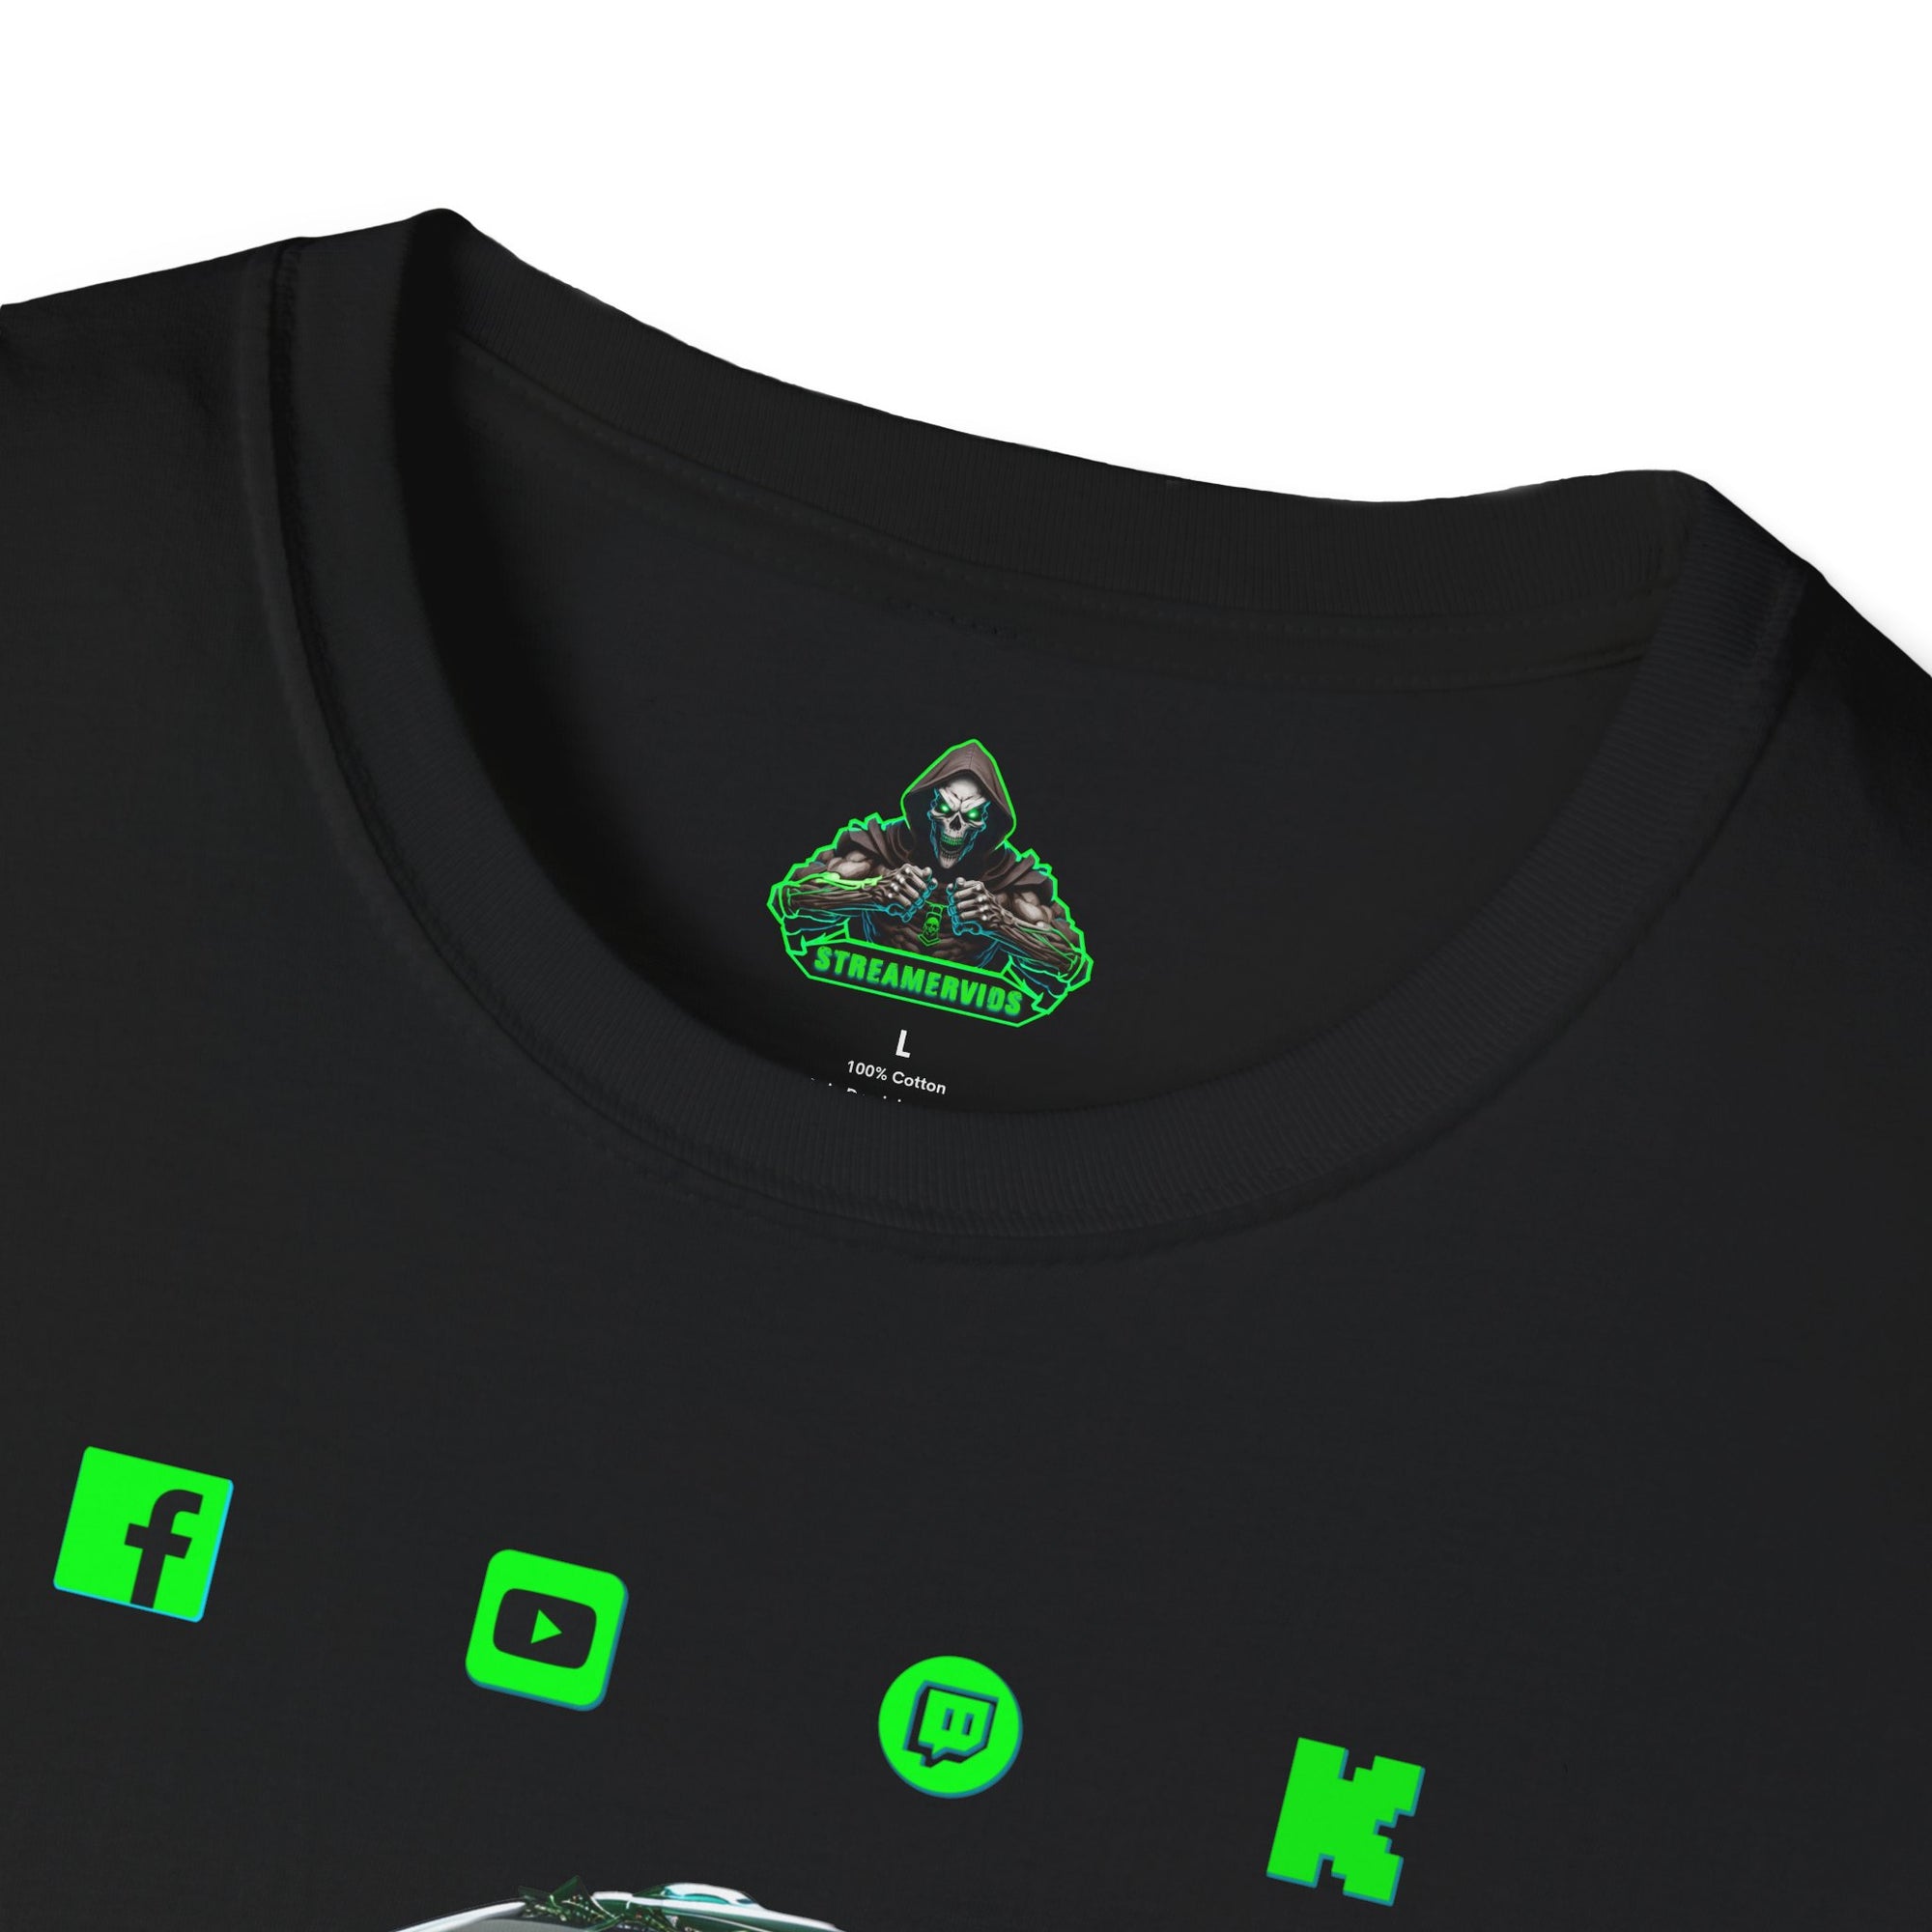 StreamerVids Gaming Racing Car T-Shirt with Social logos.